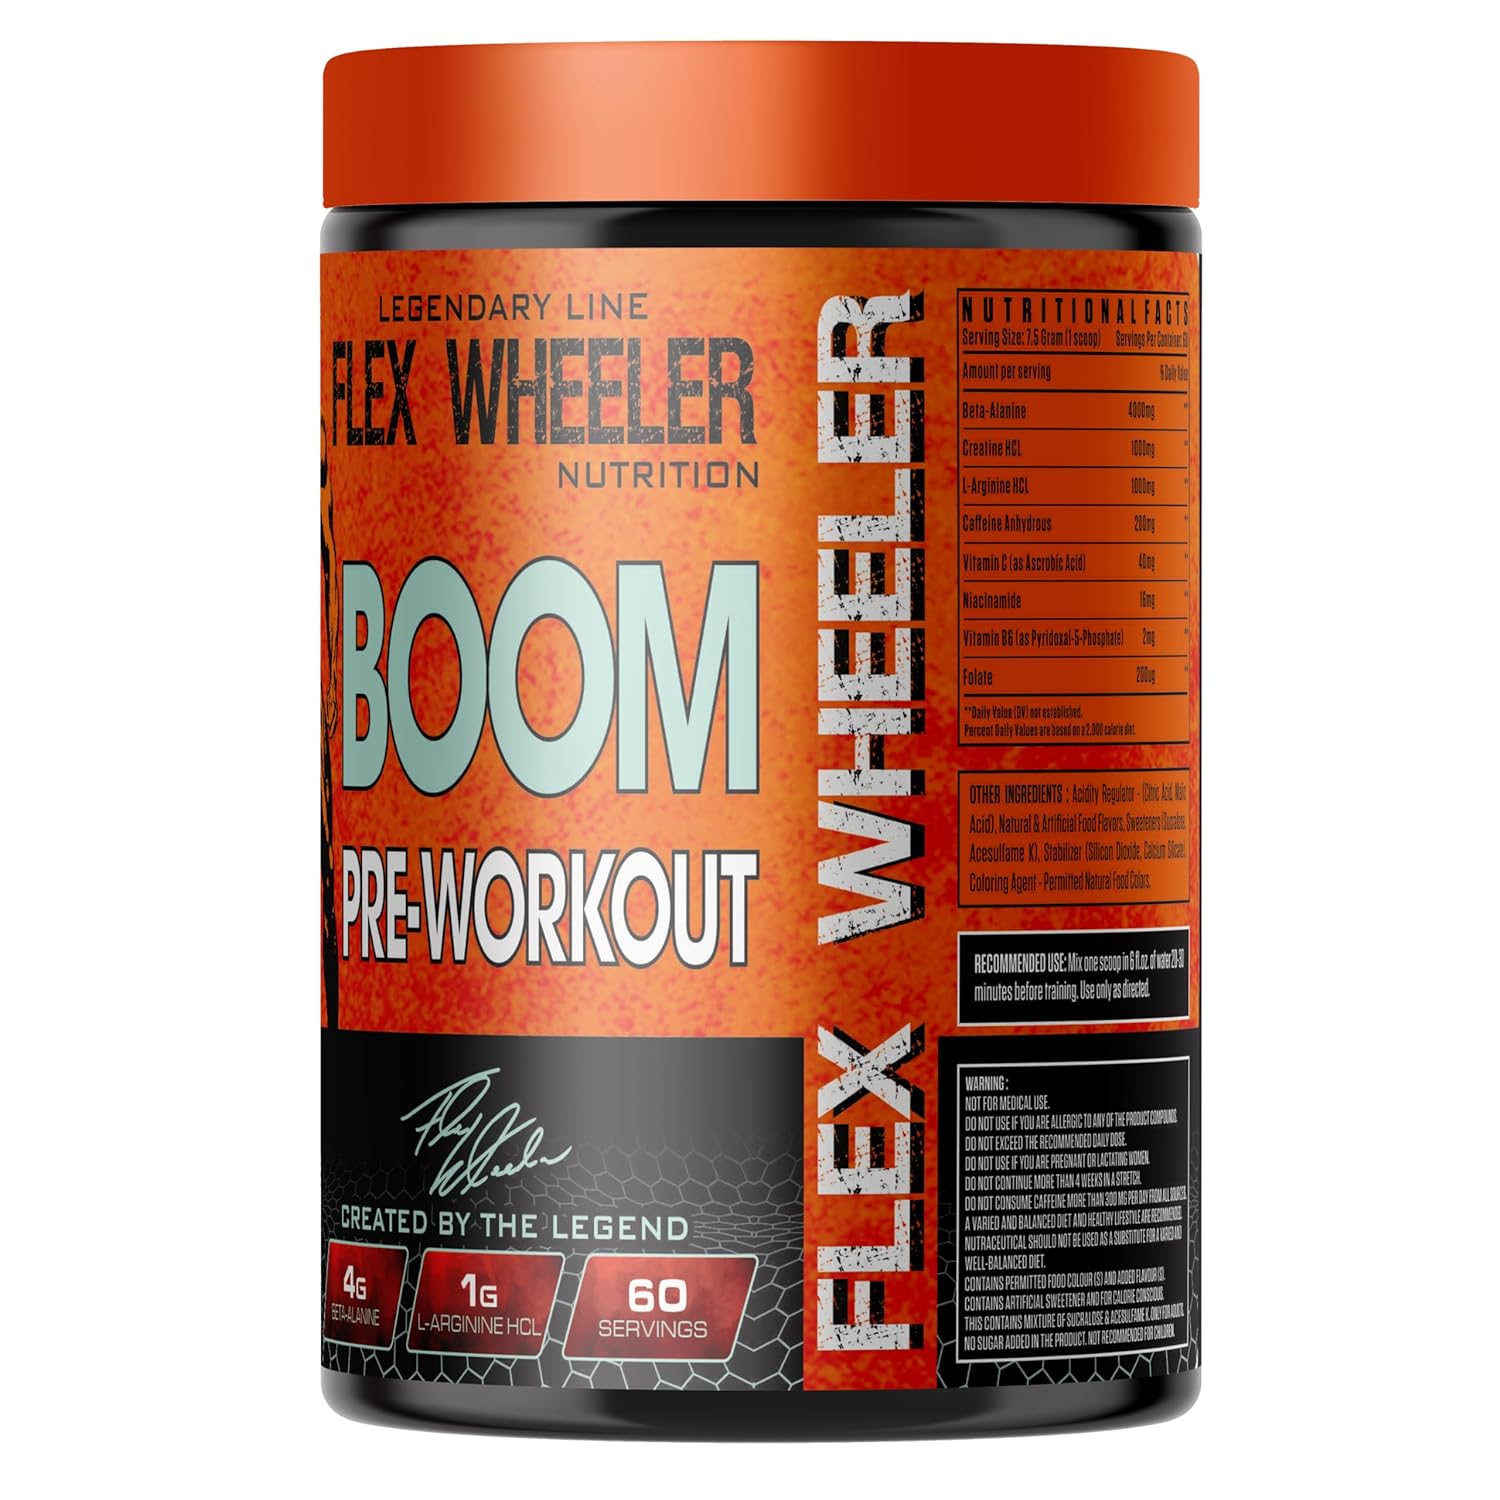 Flex Wheeler Boom Advanced Pre Workout - 60 Servings